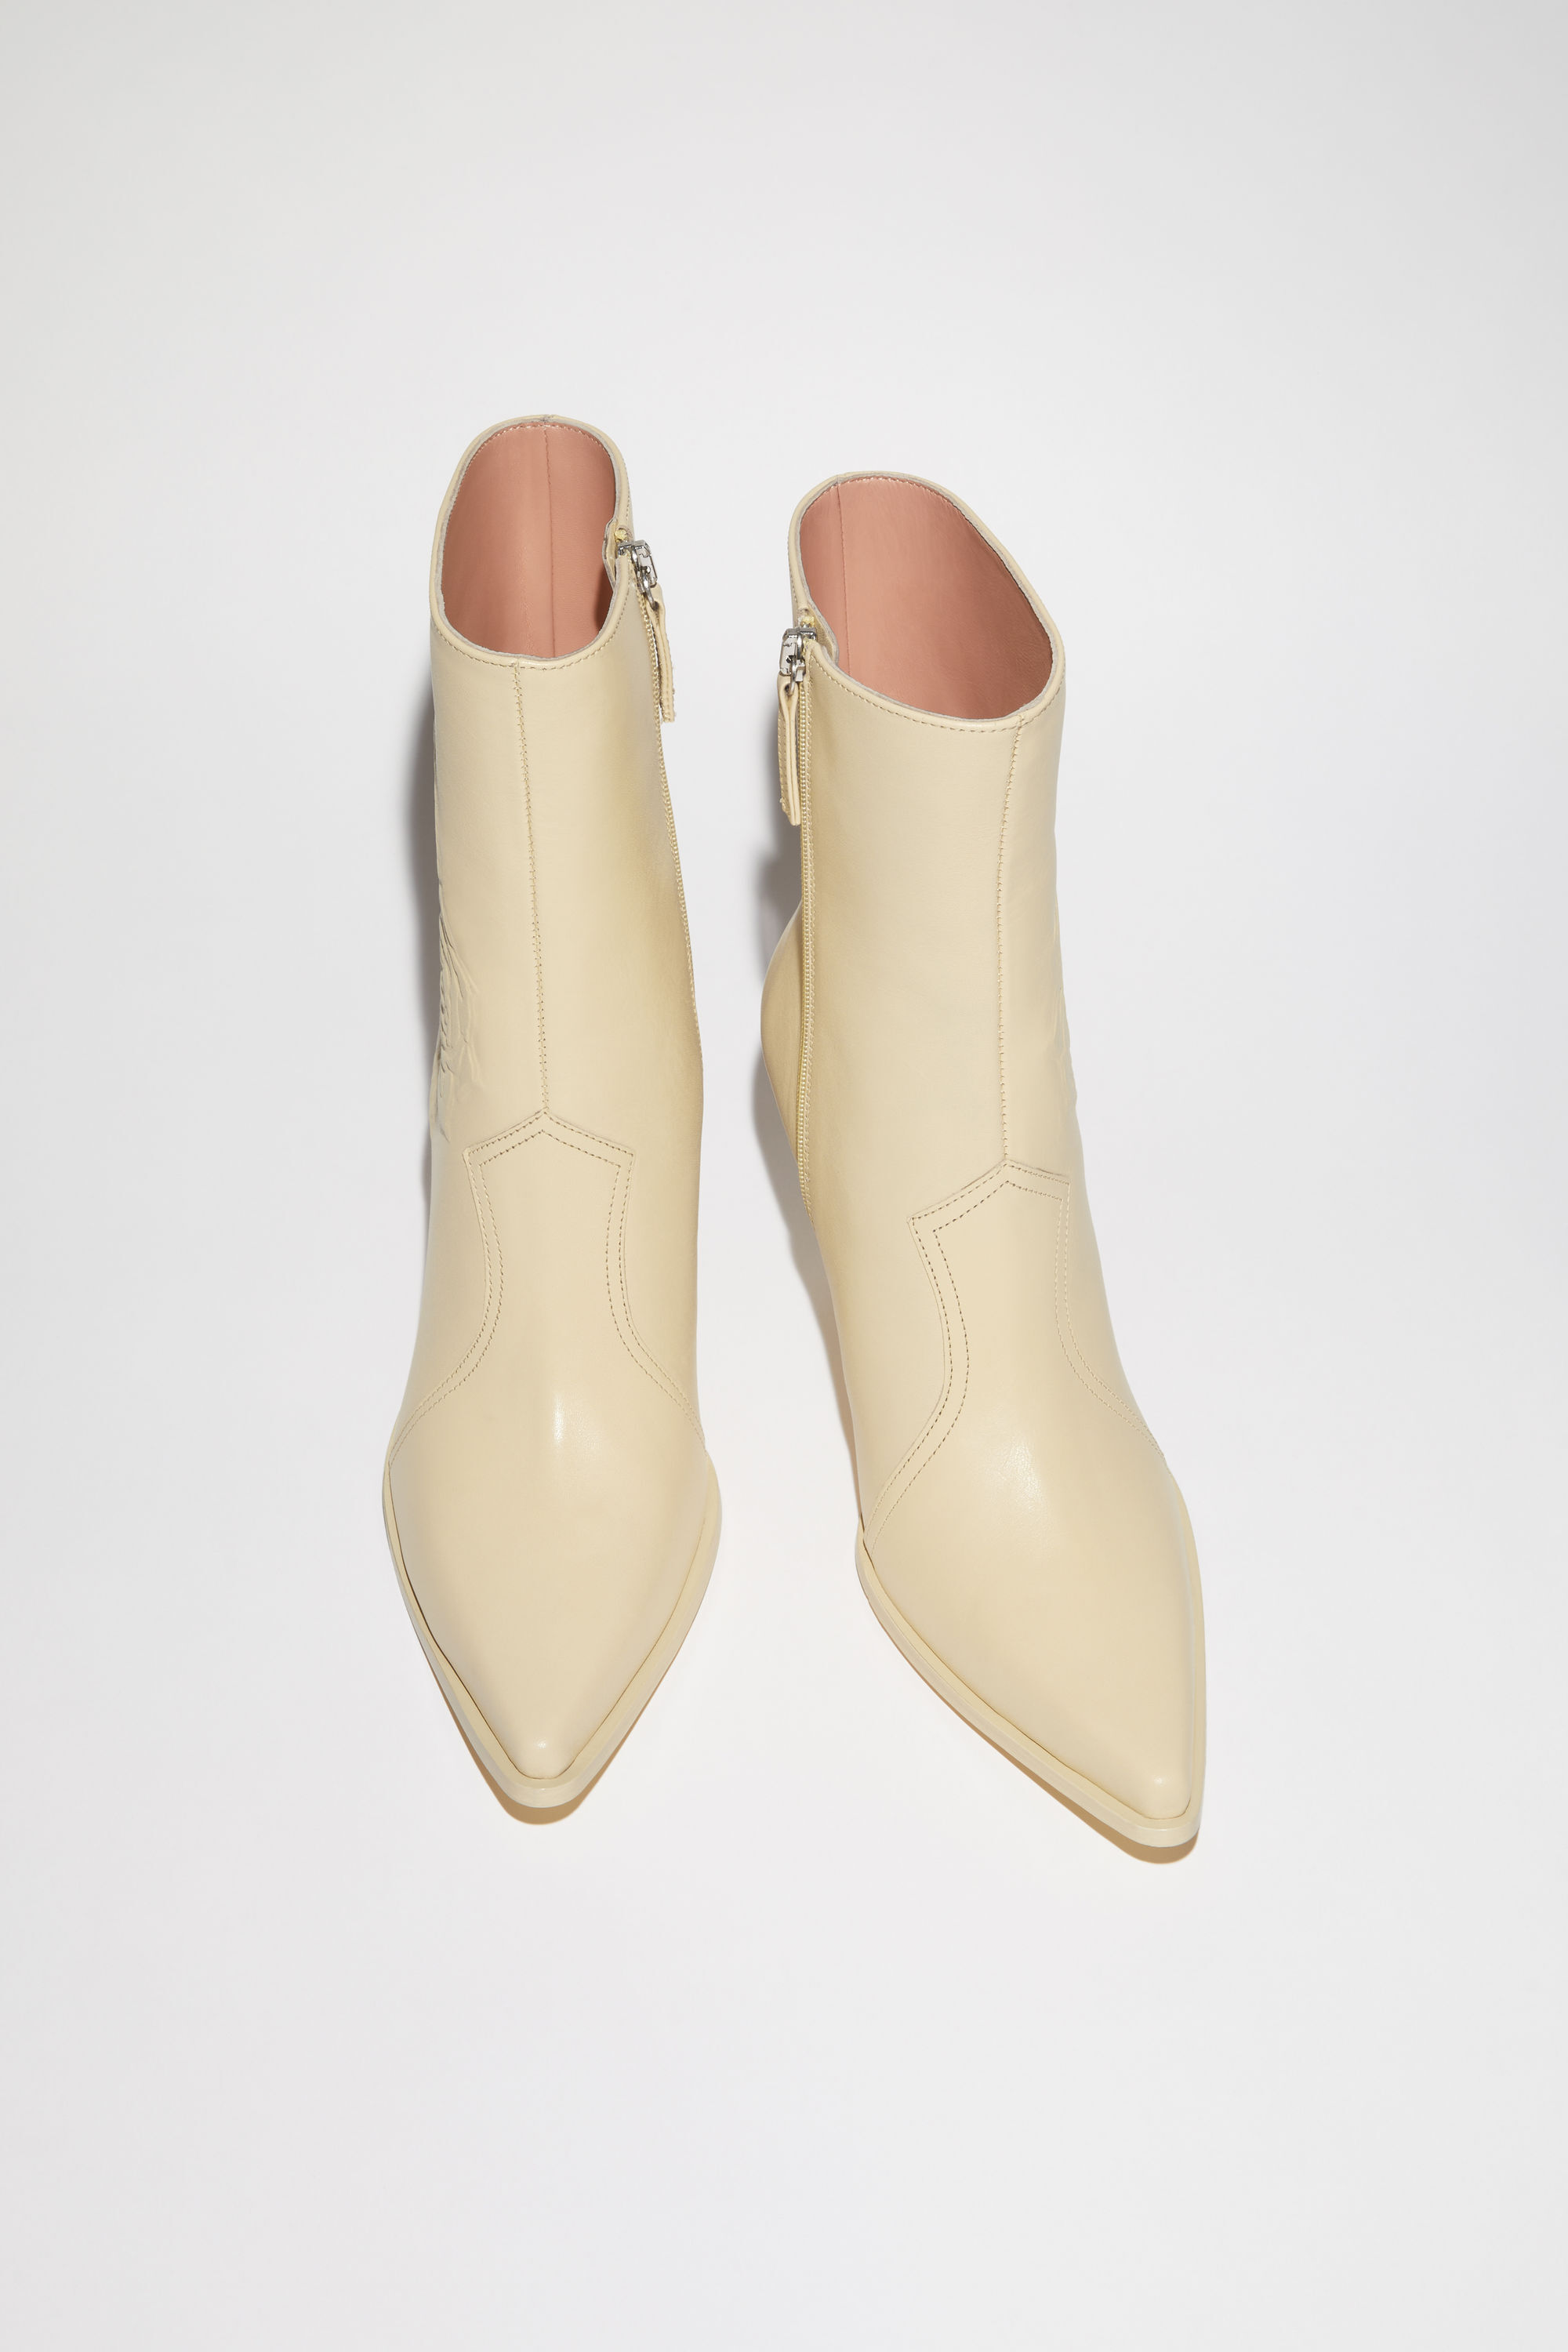 Ankle boots with spool heel in dark beige - Brentiny Paris